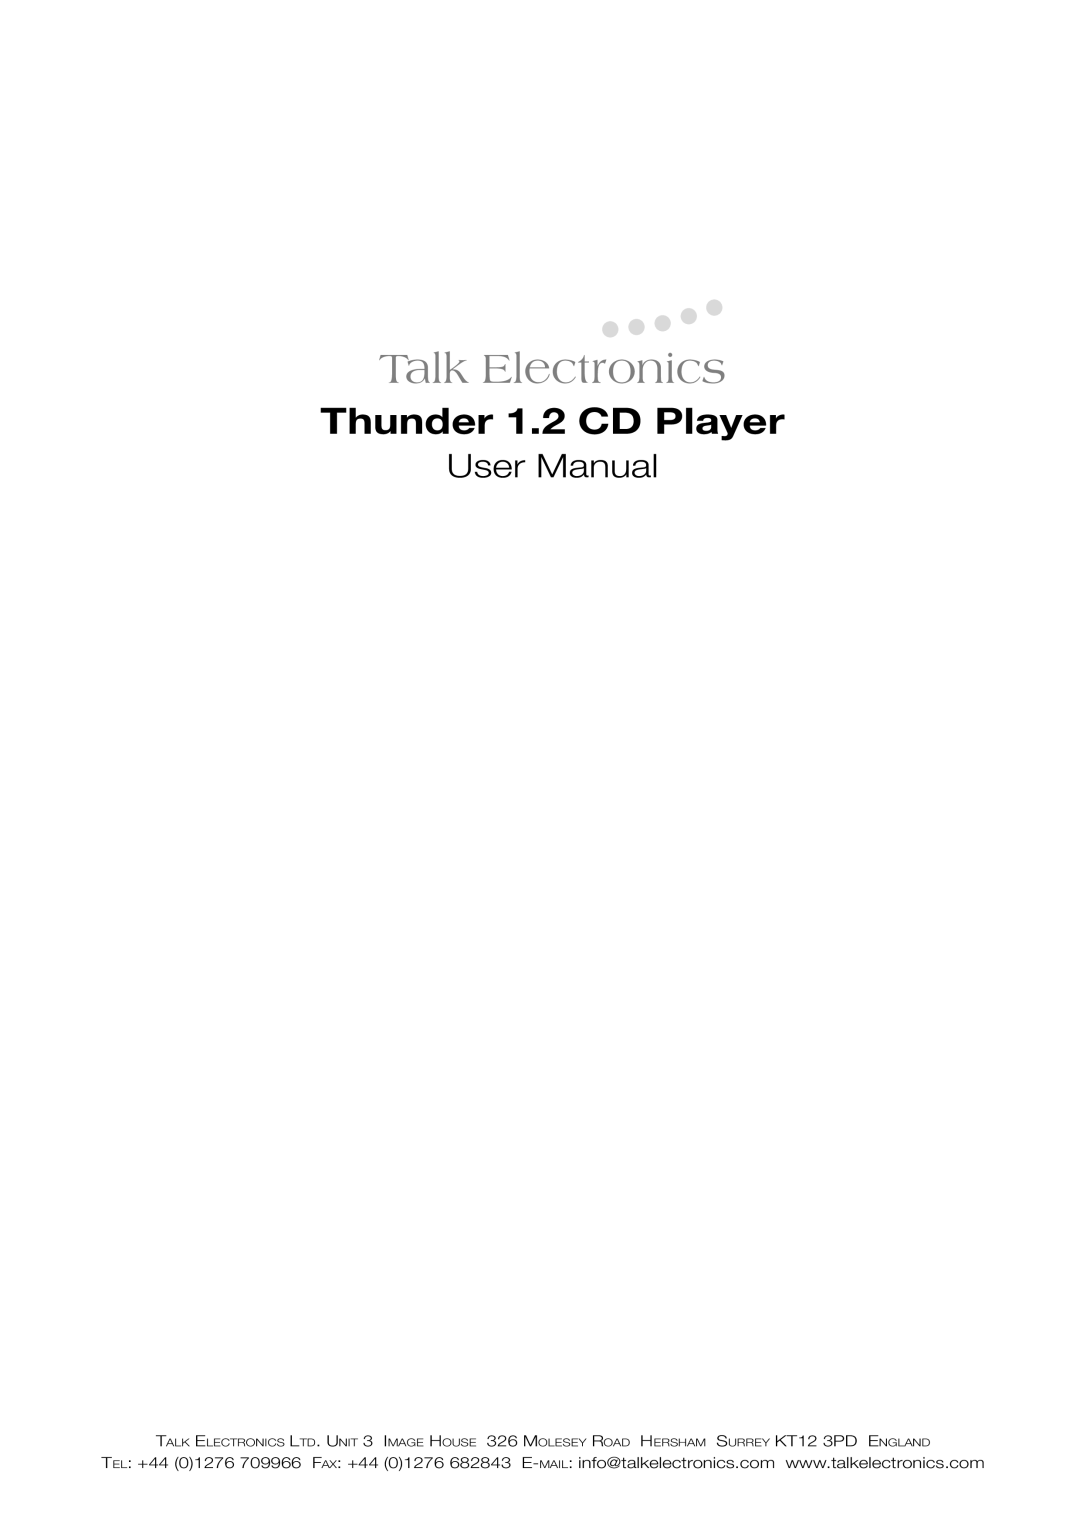 Talk electronic 2.2 user manual Talk Electronics, Thunder 1.2 CD Player 